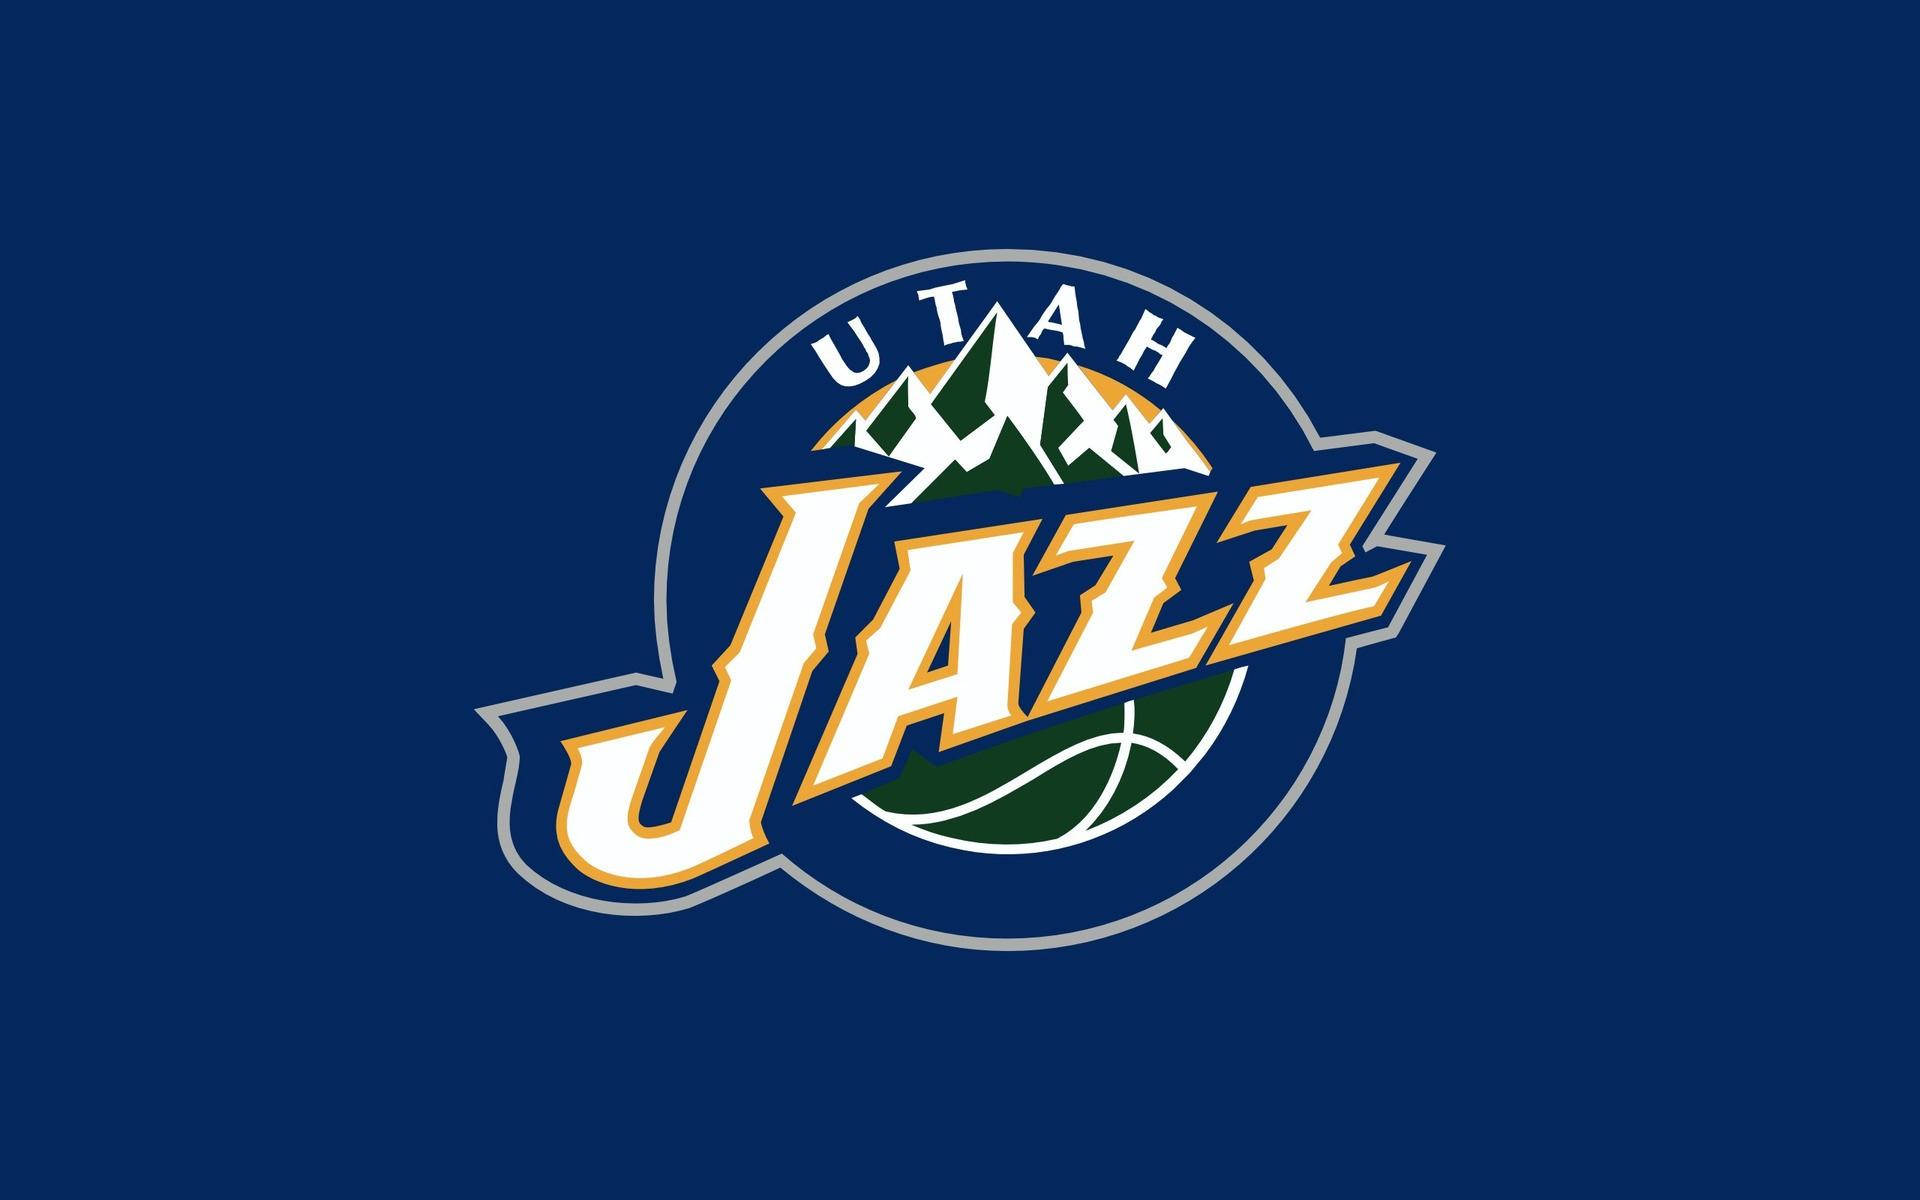 Utah Jazz Basketball Team Background